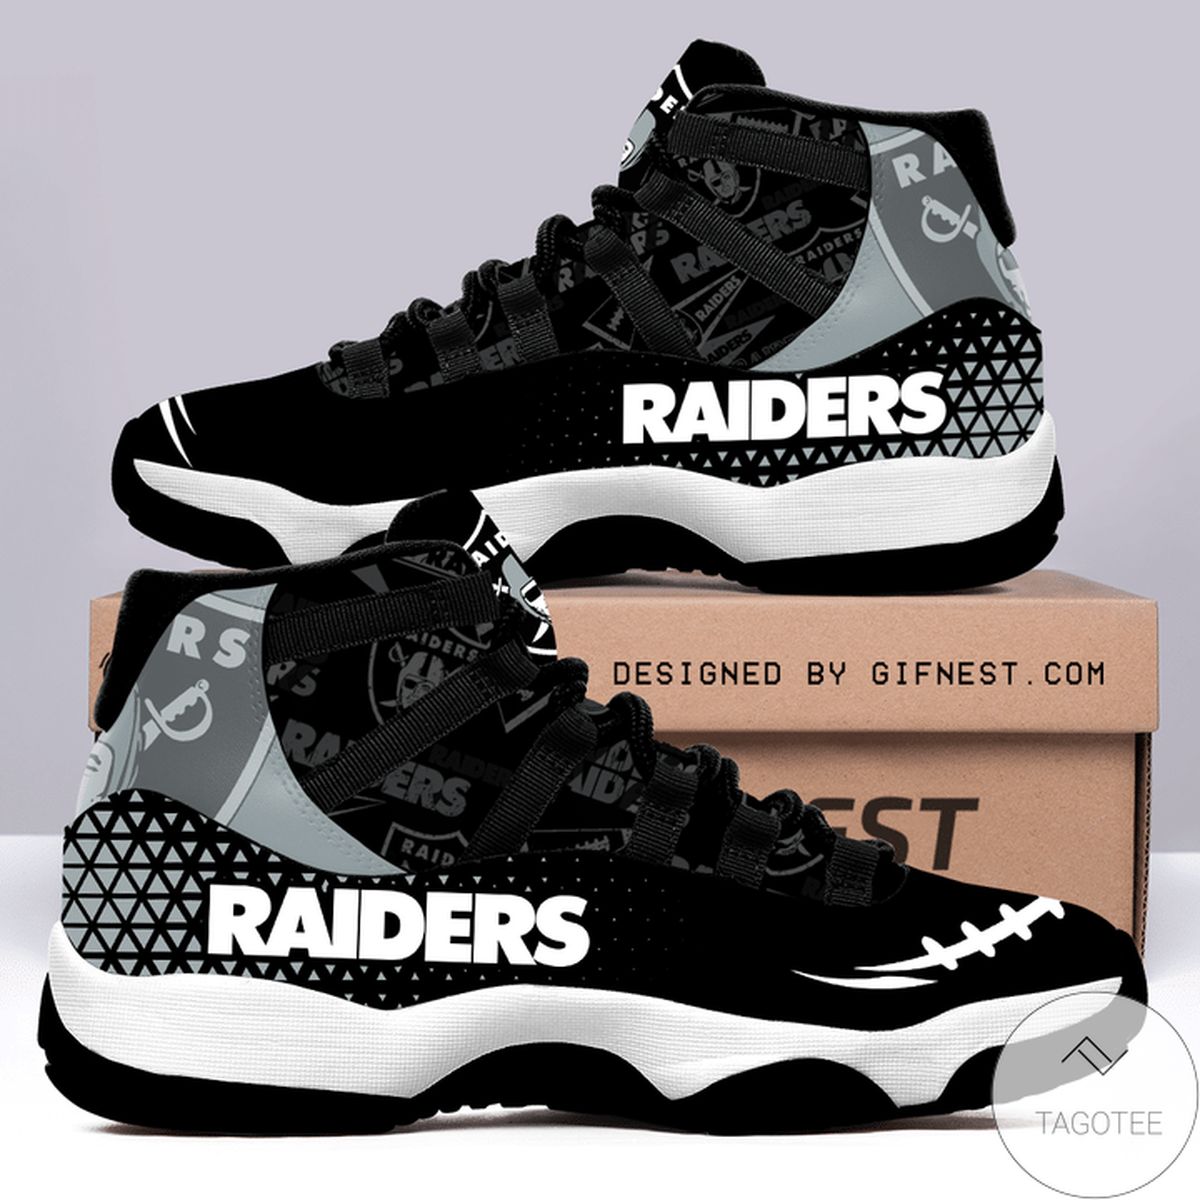 Las Vegas Raiders Air Jordan 11 Shoes